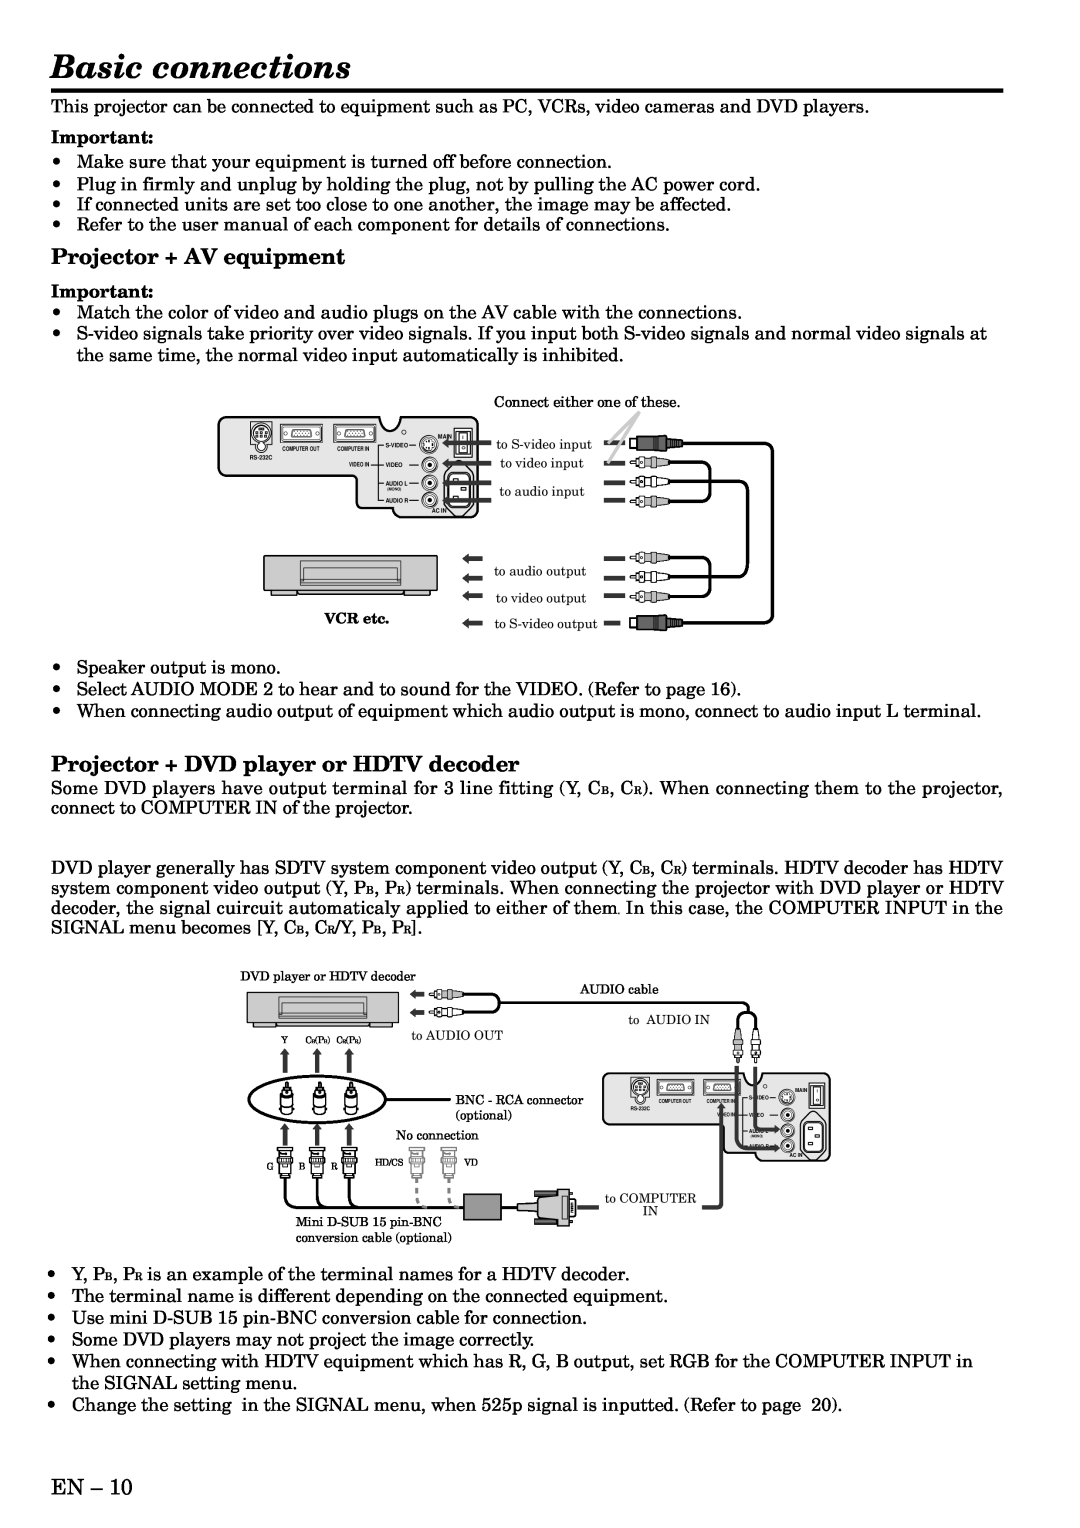 Mitsubishi Electronics LVP-SA51U Basic connections, Projector + AV equipment, Projector + DVD player or HDTV decoder 